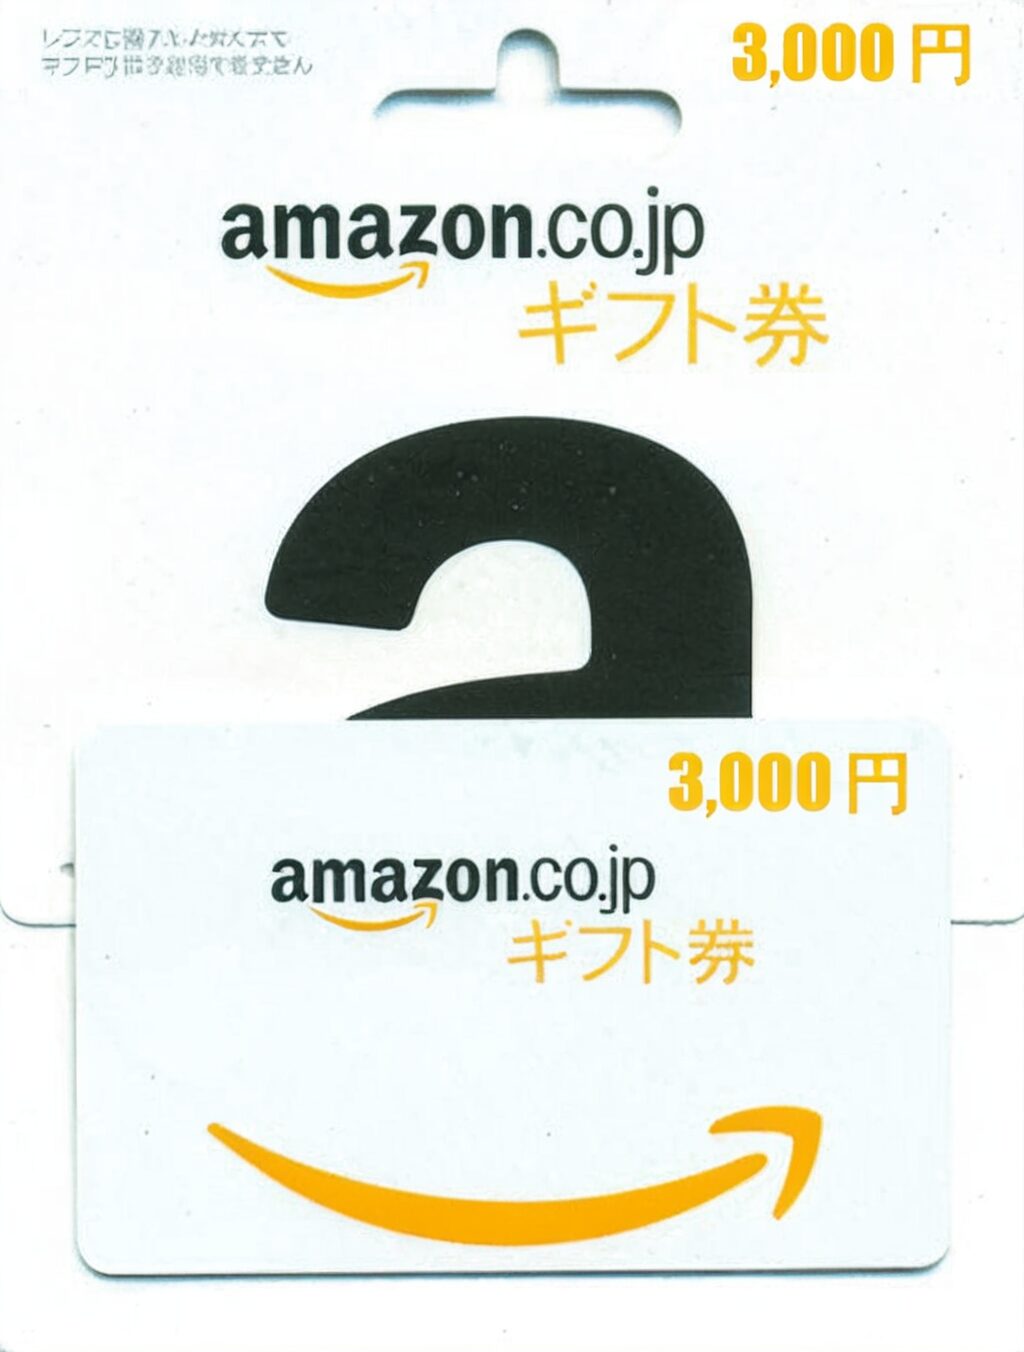 amazon japan gift cards